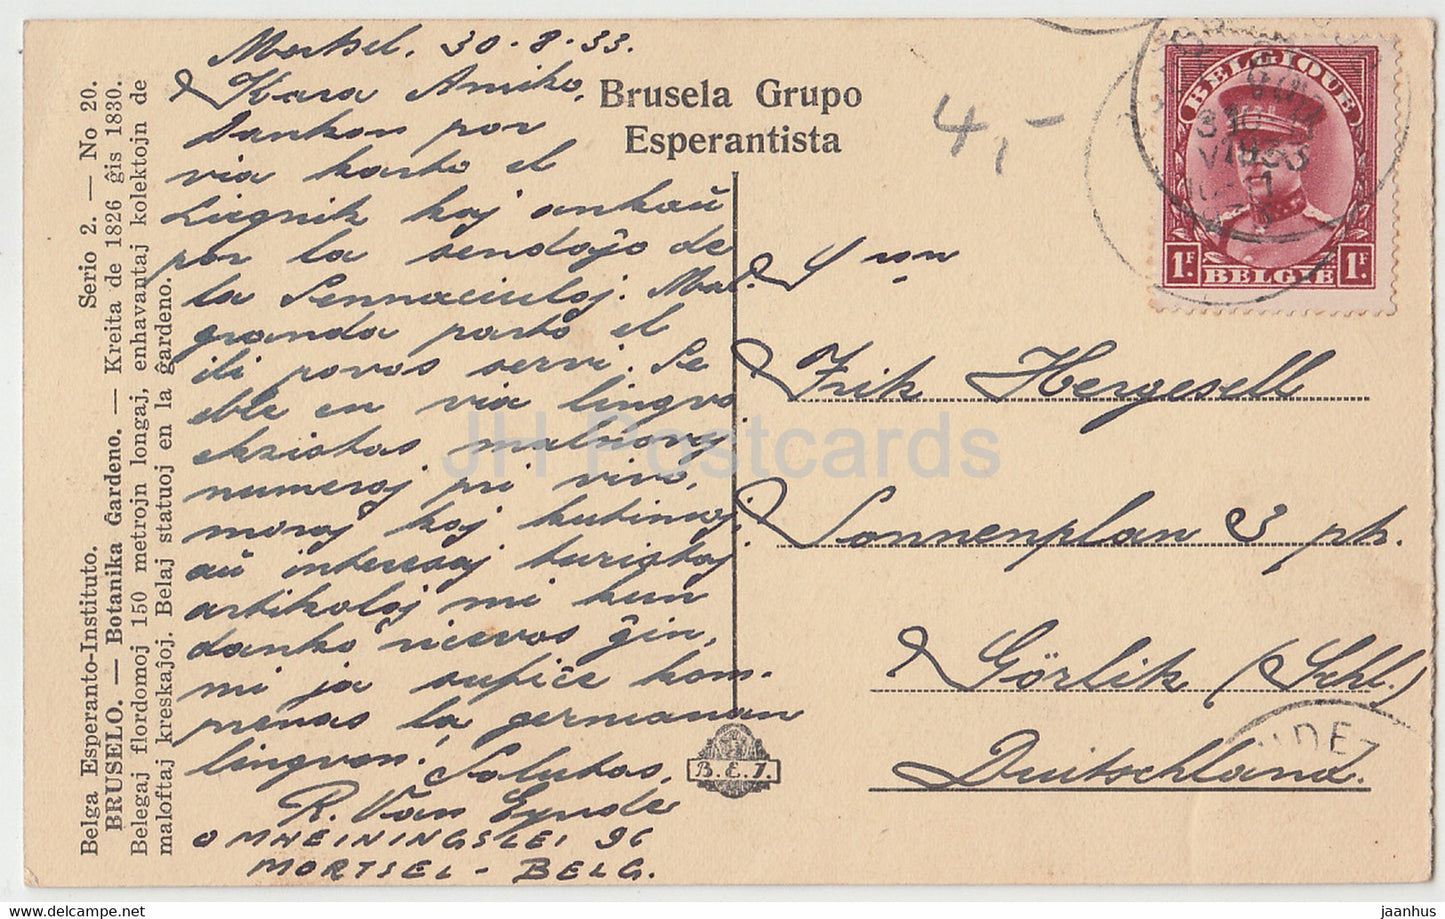 Brussels - Bruselo - Botanika Gardeno - tram - Esperanto - old postcard - 1933 - Belgium - used